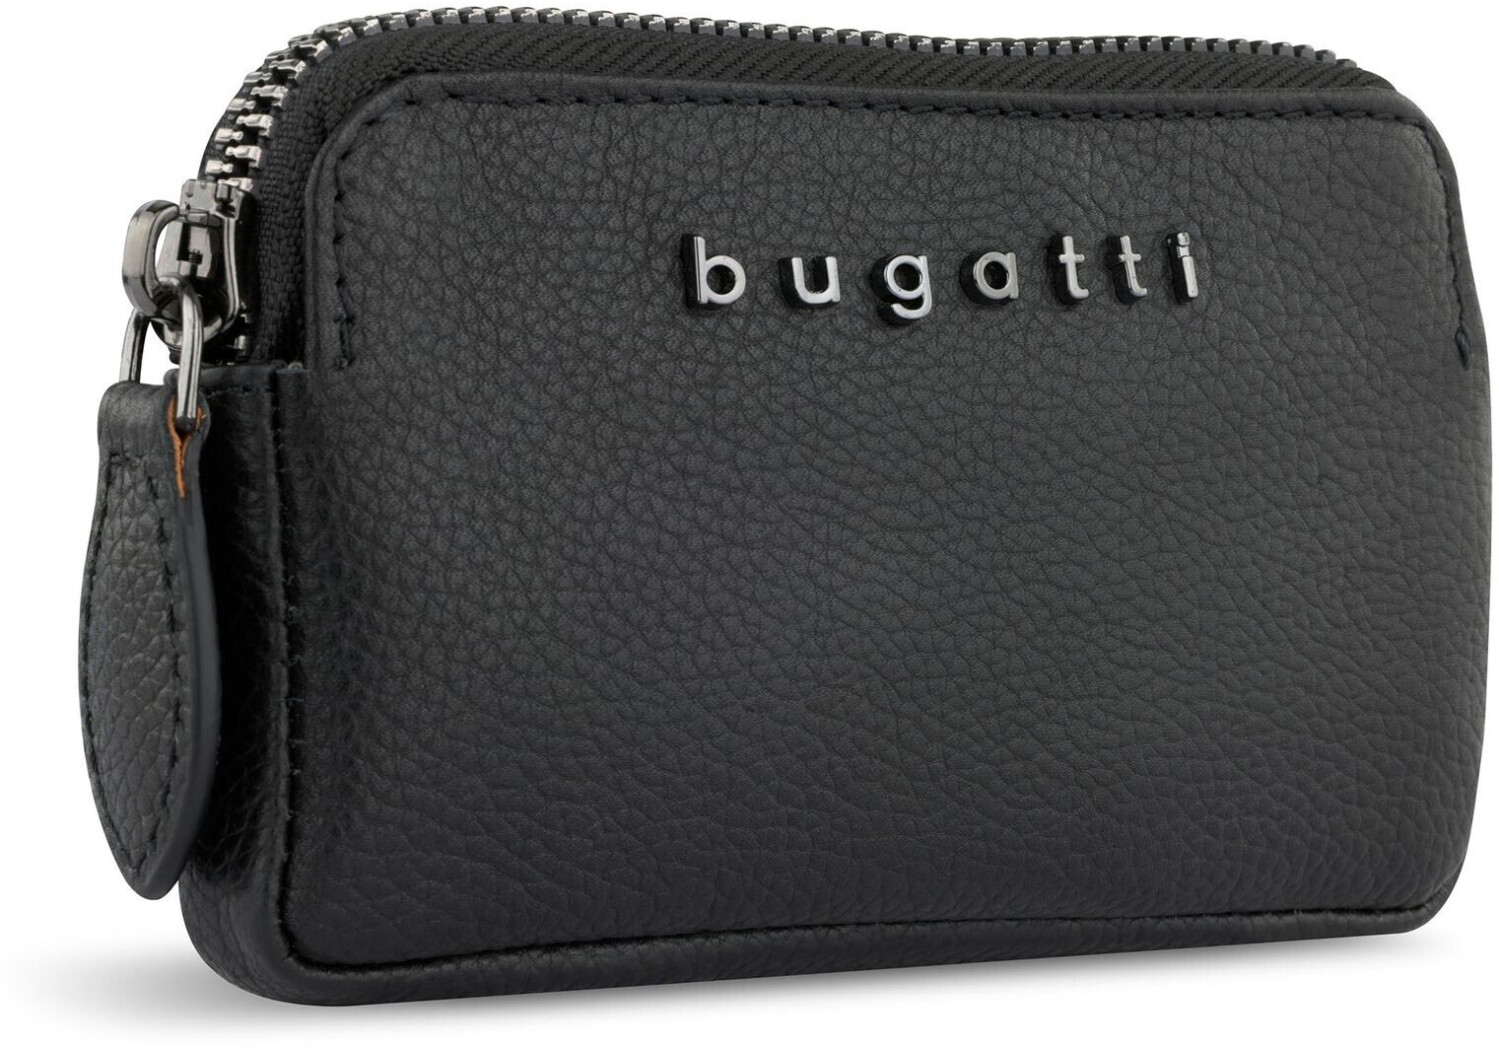 29,99 ab bei Bella (494820-01) Key € Wallet | Preisvergleich Bugatti black